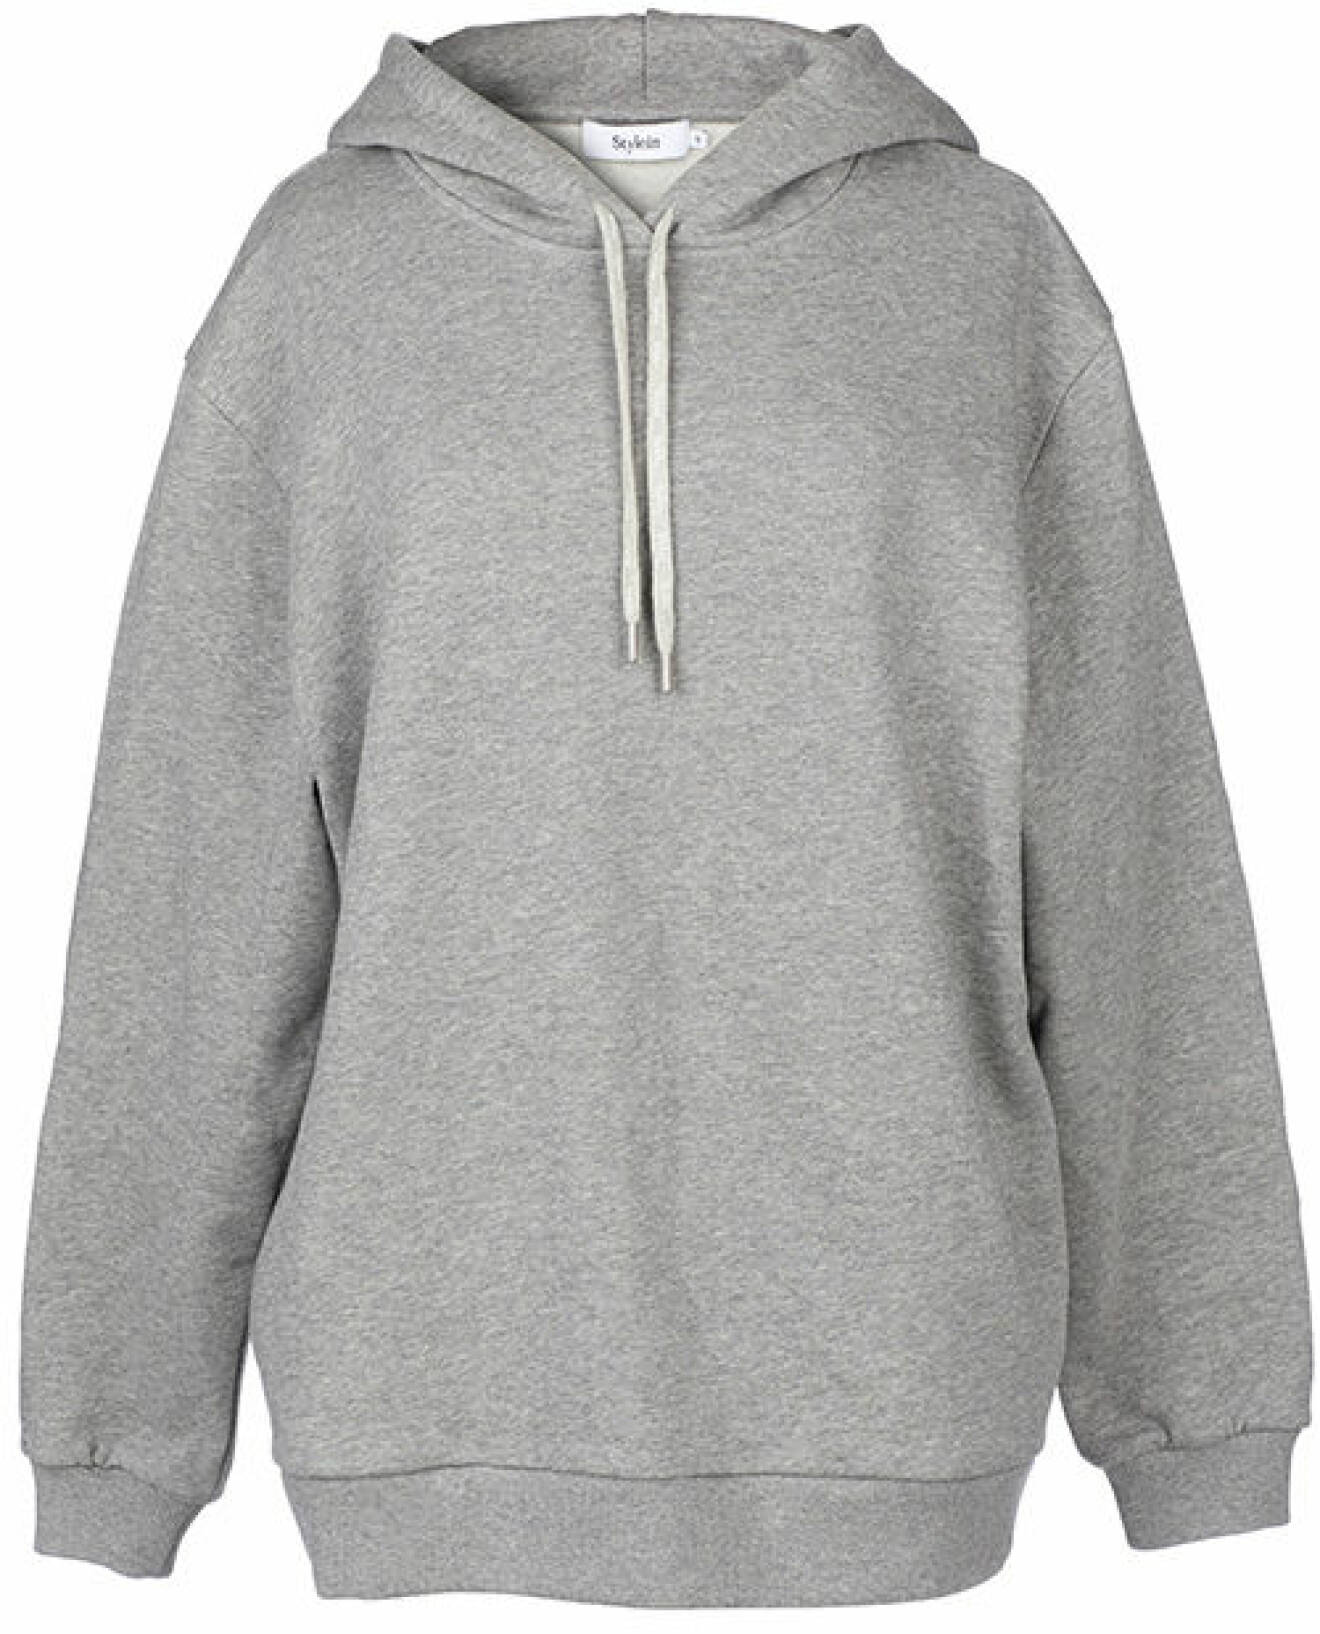 grå hoodie stylein